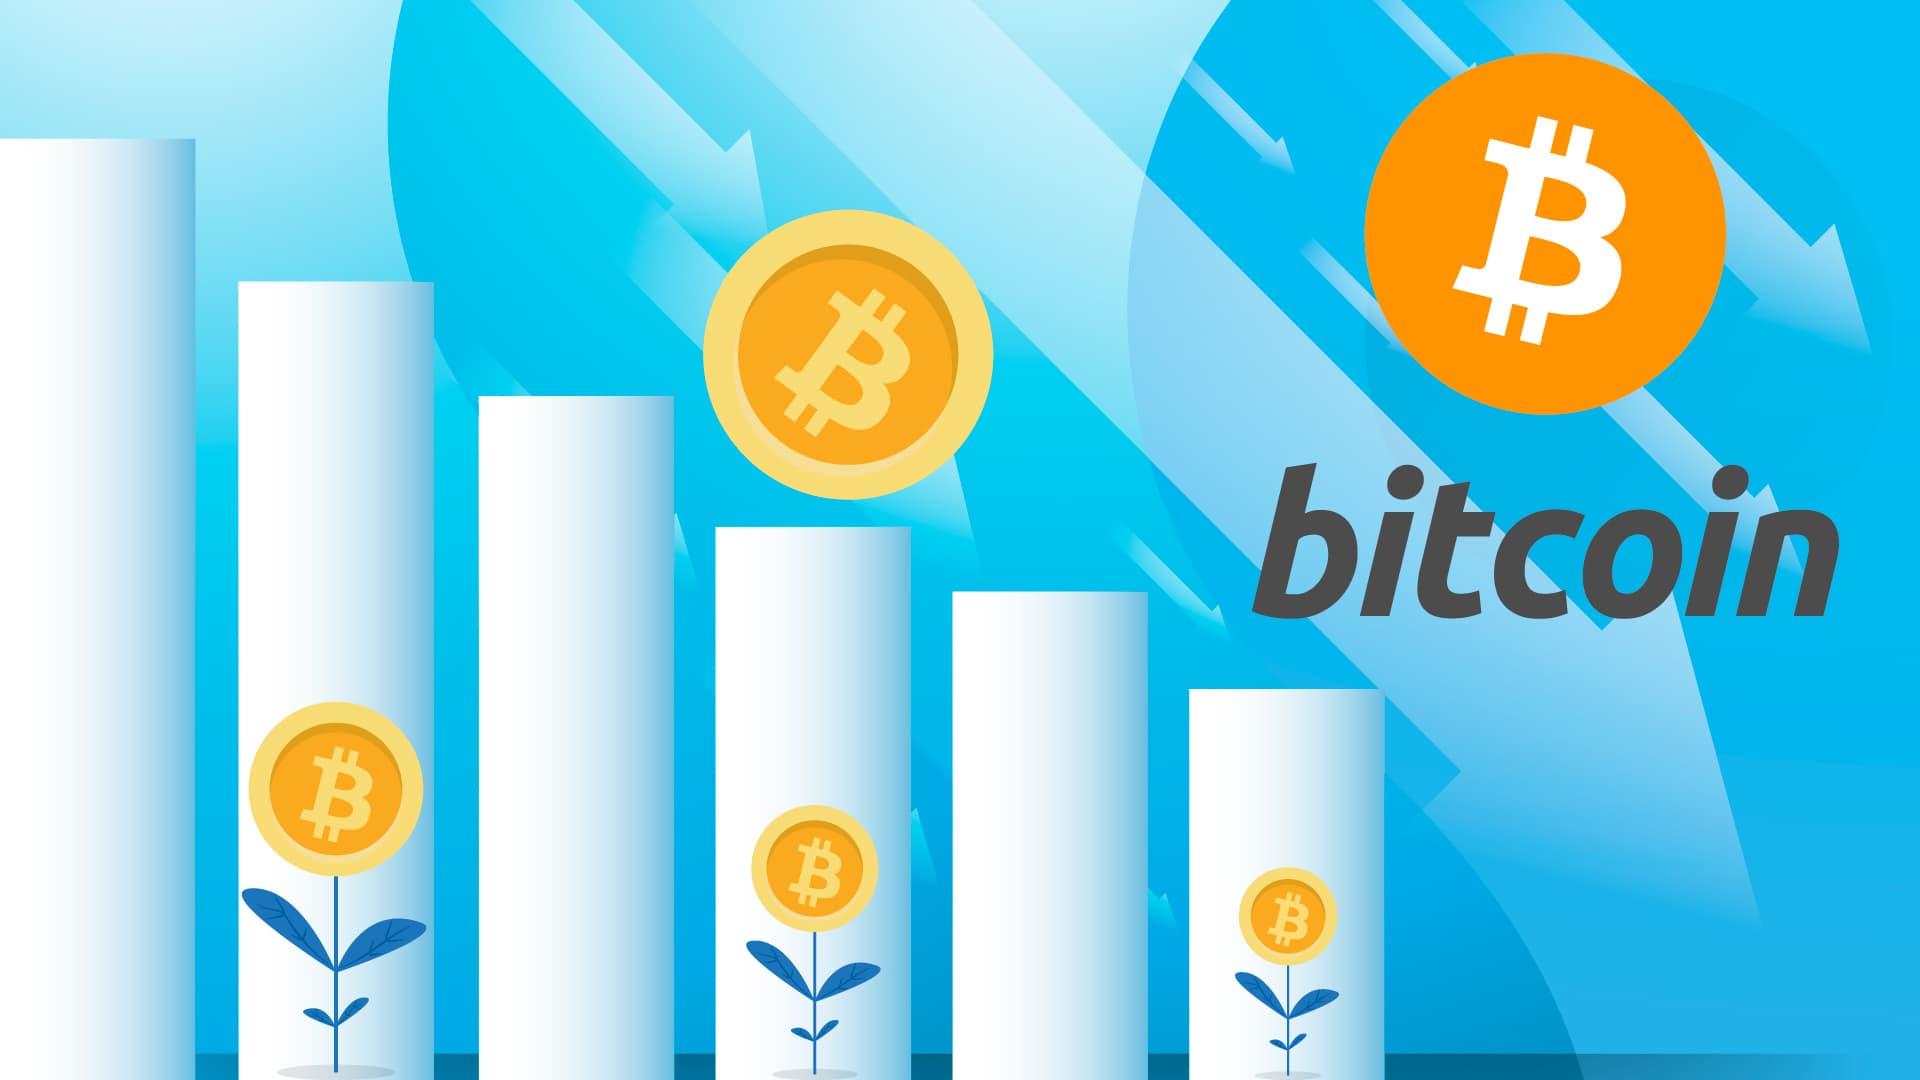 Bitcoin (BTC) News